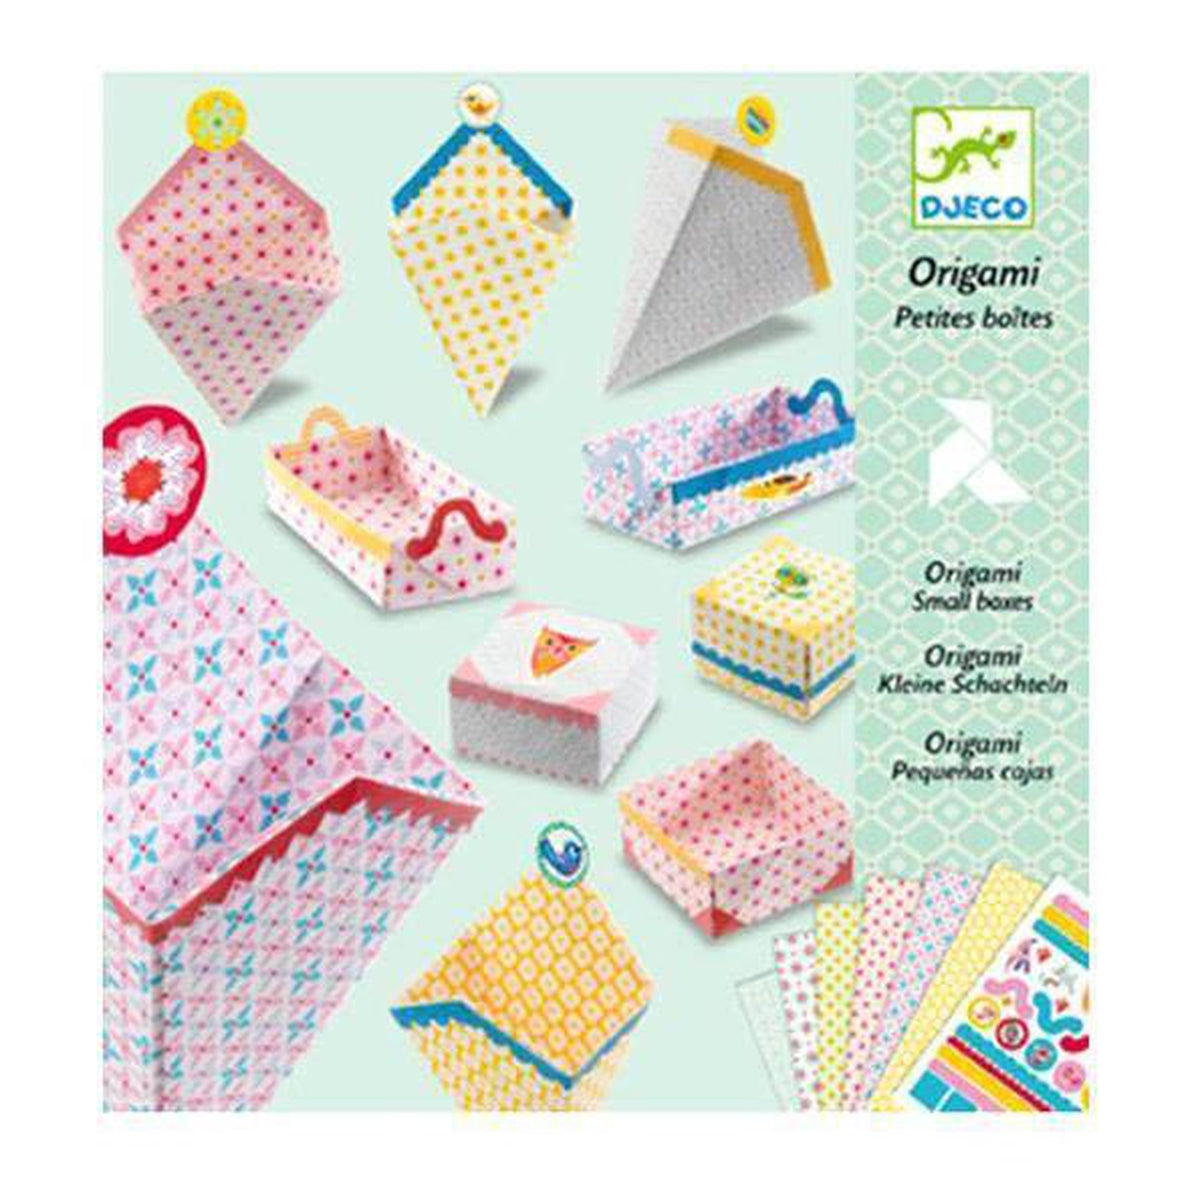 Djeco Origami Kit (Small Boxes)